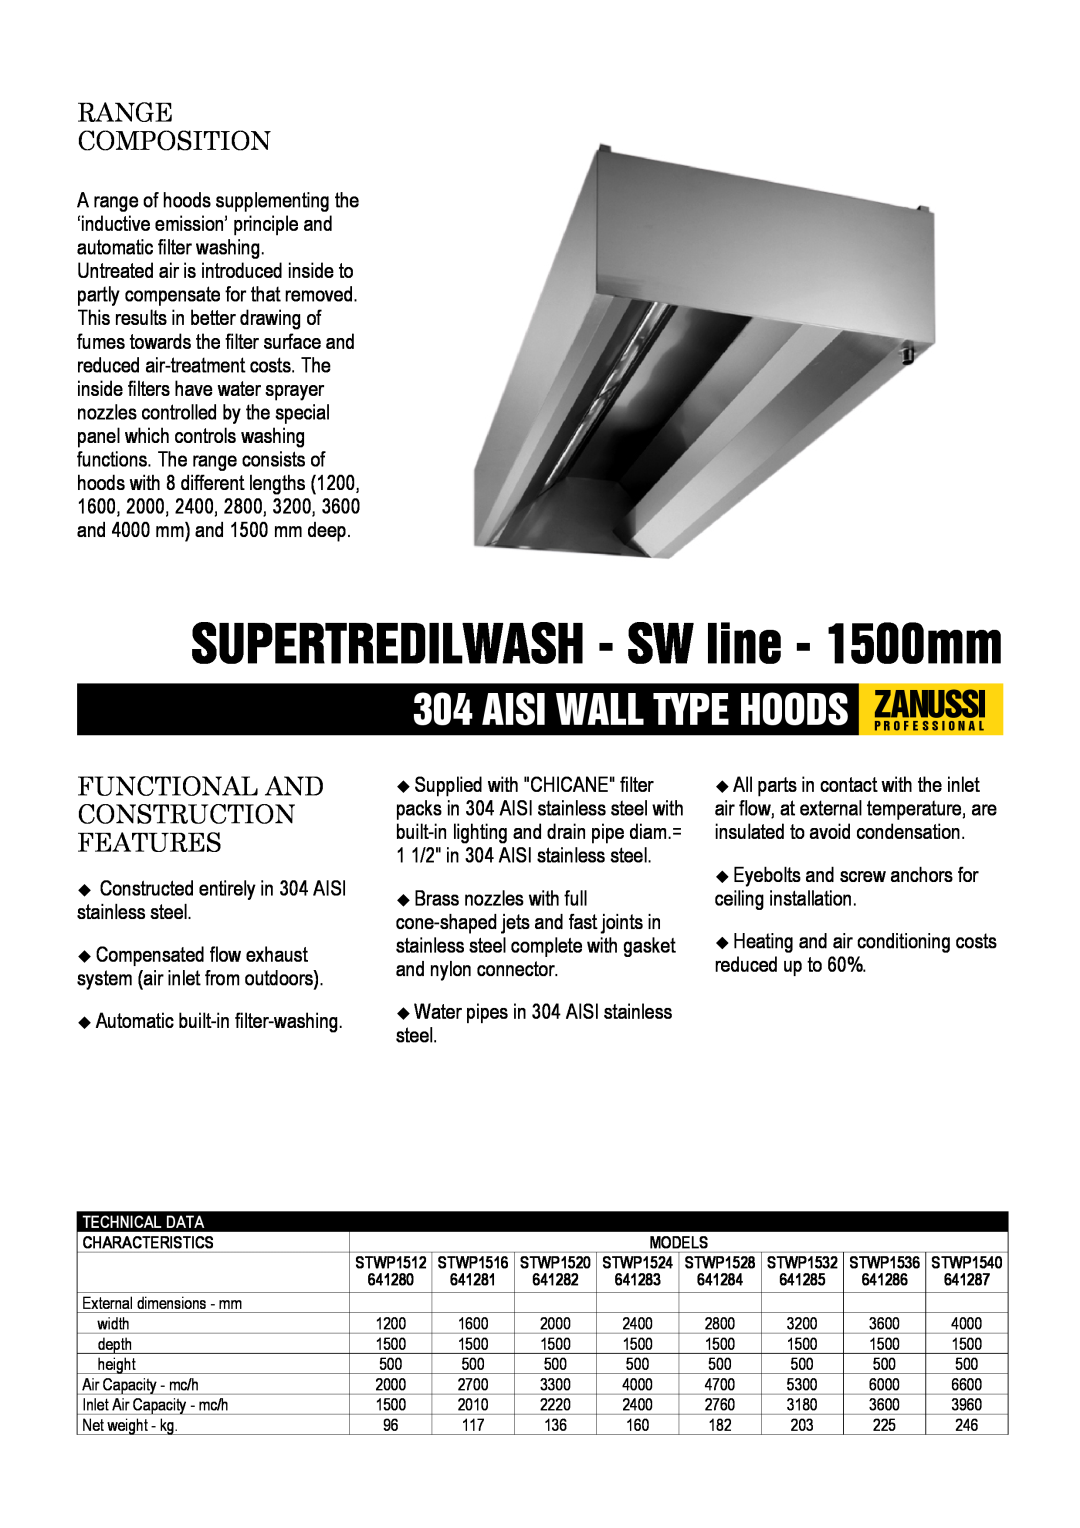 Zanussi STWP1532 dimensions SUPERTREDILWASH - SW line - 1500mm, Aisi Wall Type Hoods Zanussip R O F E S S I O N A L 